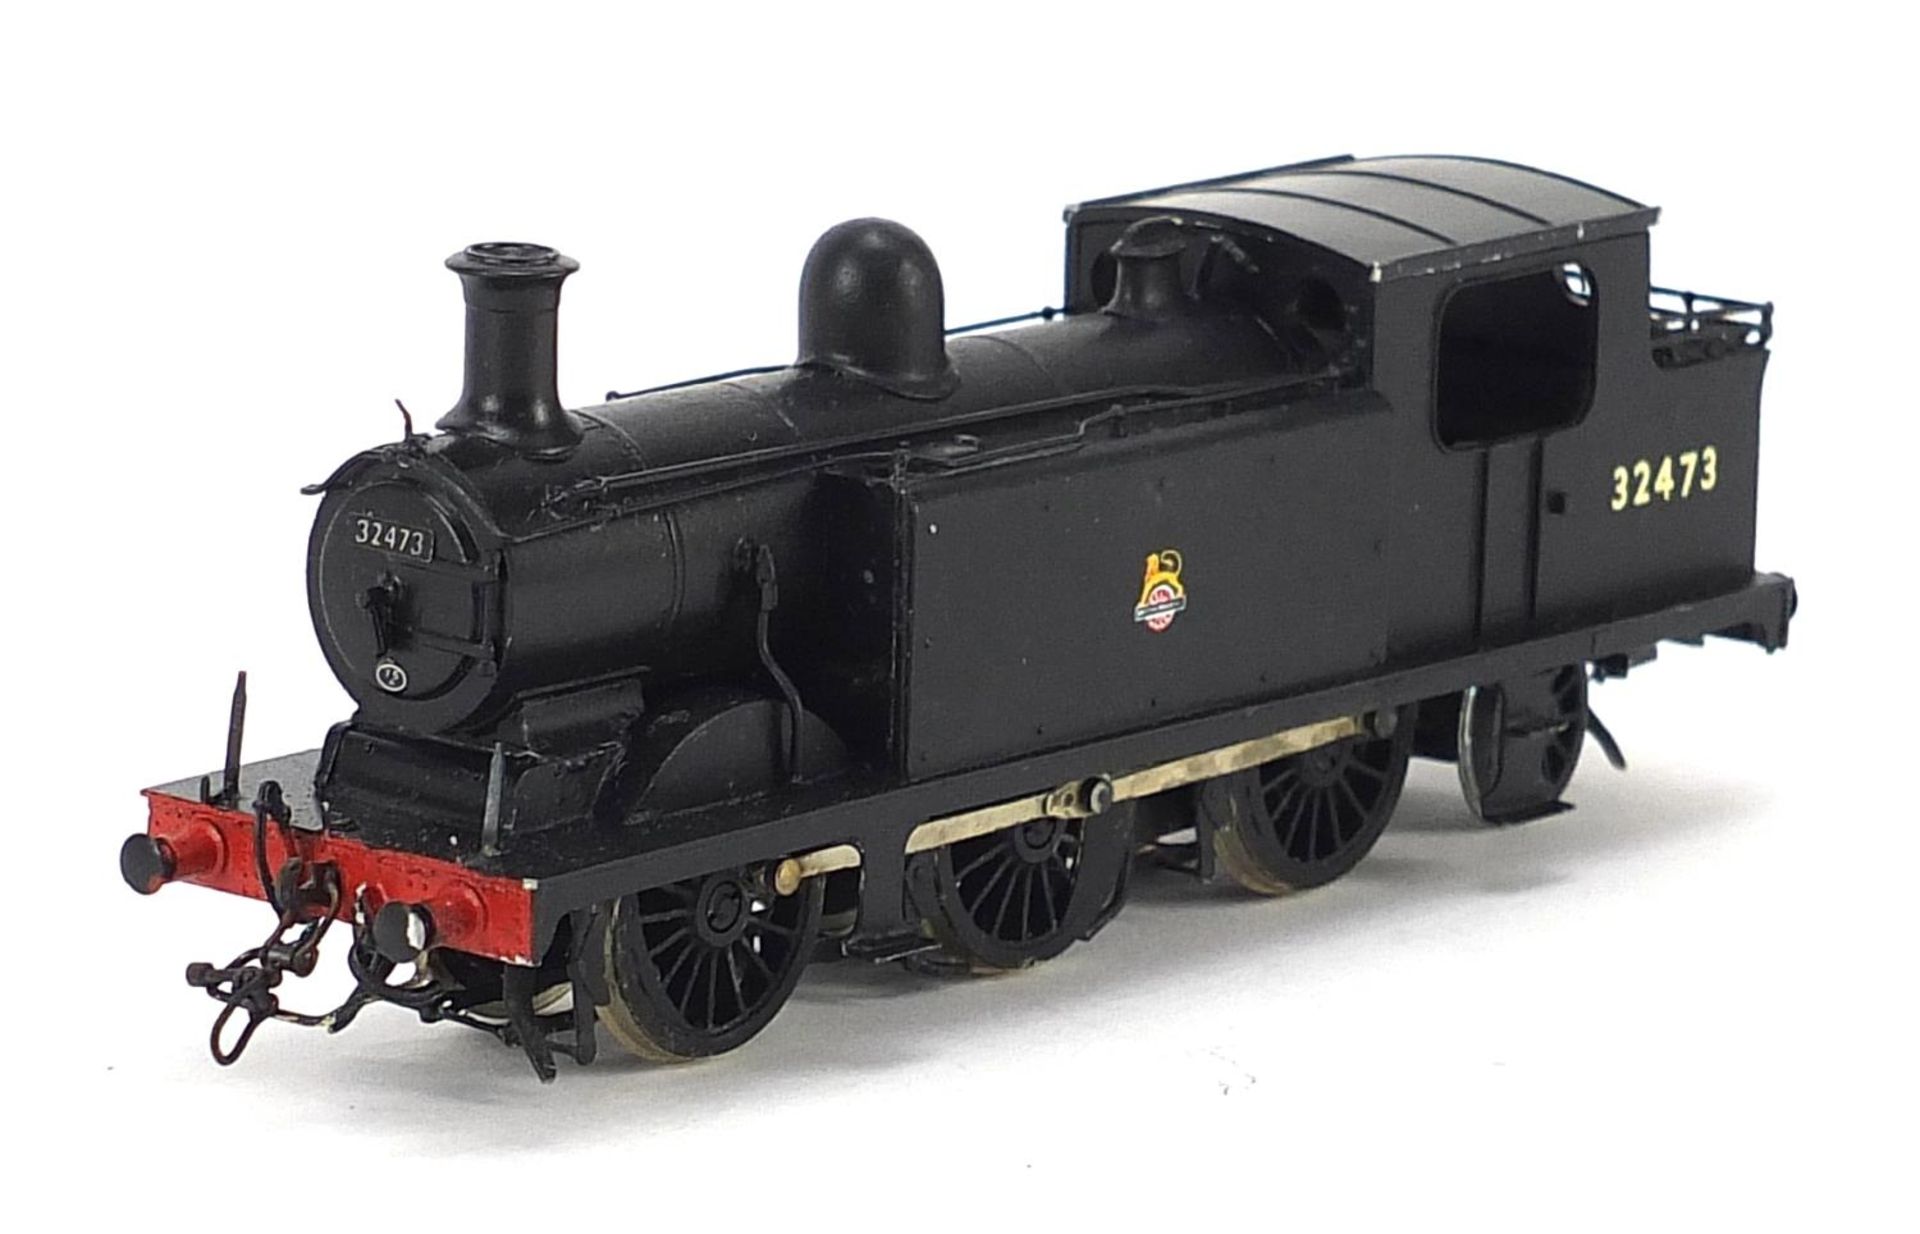 00 gauge model railway 0-6-2 T kit British Railway locomotive with box - Image 2 of 4